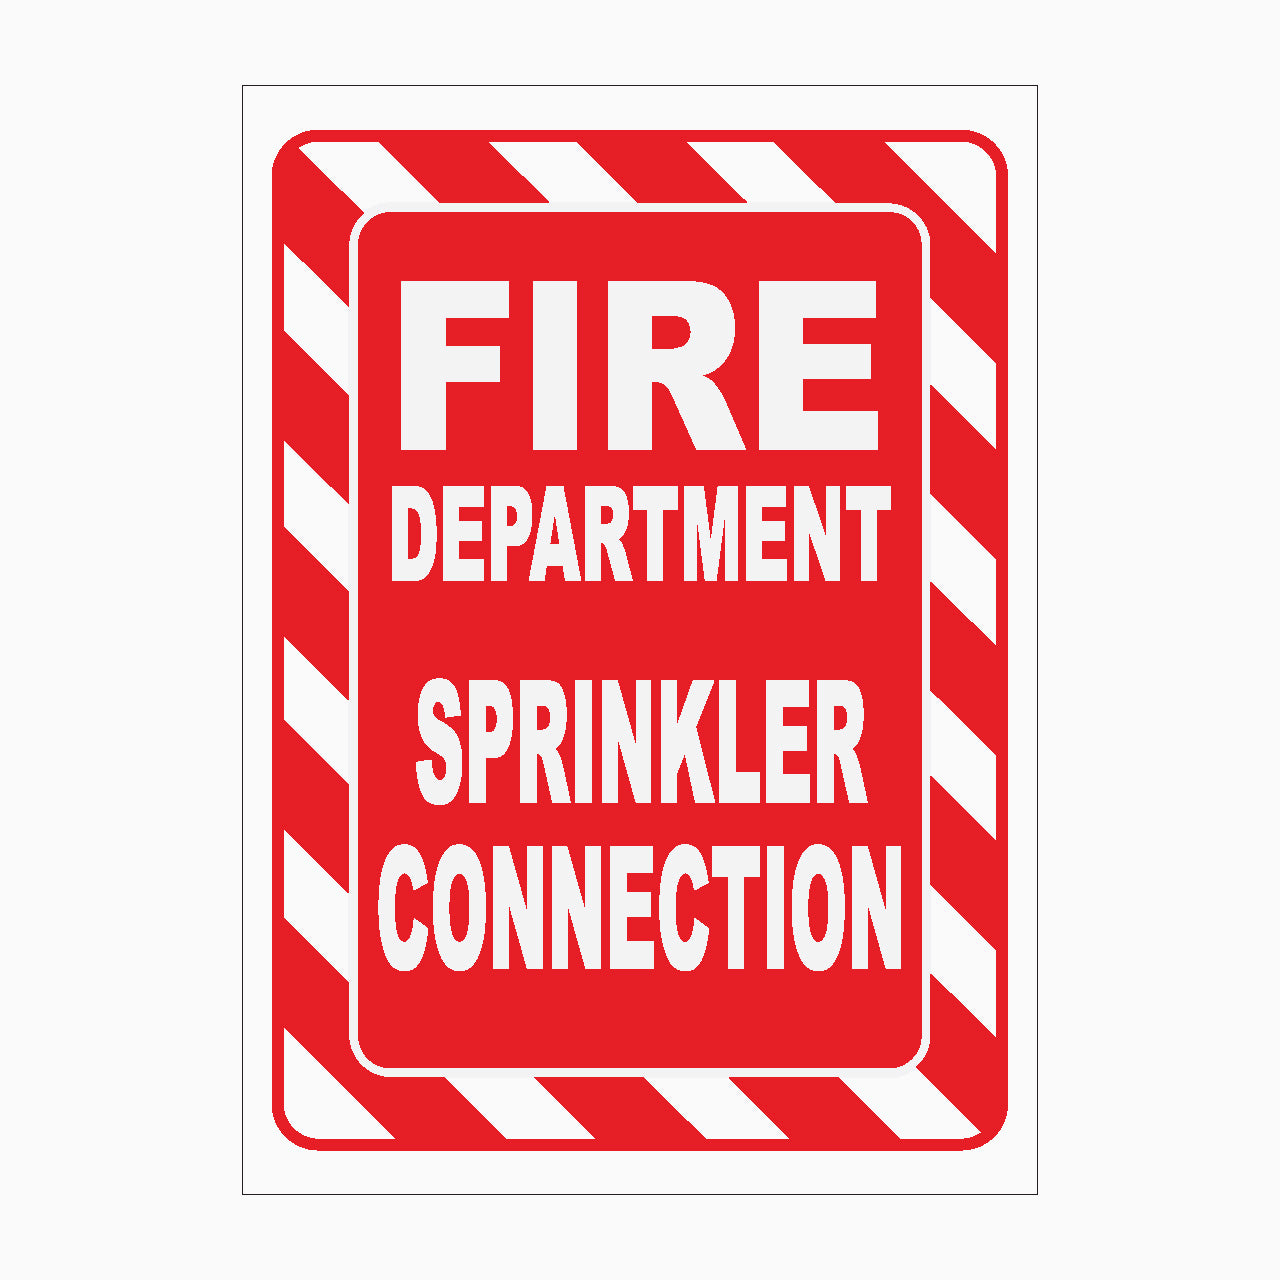 FIRE DEPARTMENT SPRINKLER CONNECTION SIGN - fire safety signs - online shop - get signs